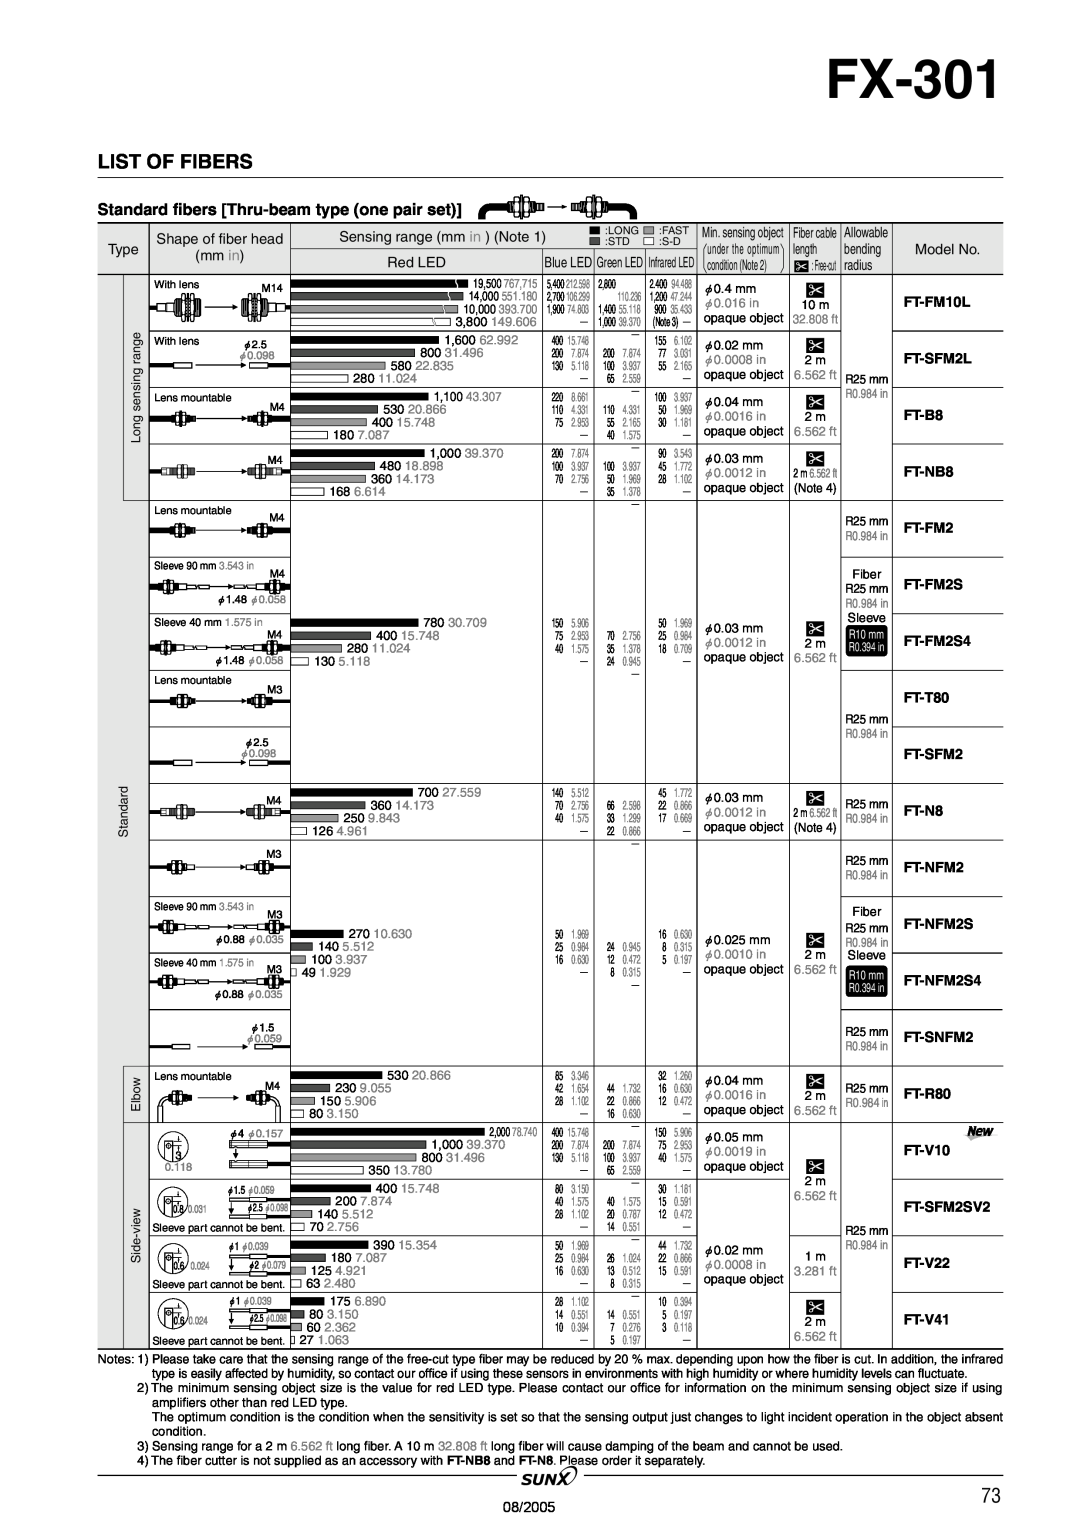 Panasonic FX-301 manual List Of Fibers, Standard fibers Thru-beamtype one pair set, FT-B8, FT-NB8, FT-FM2S4, FT-T80 